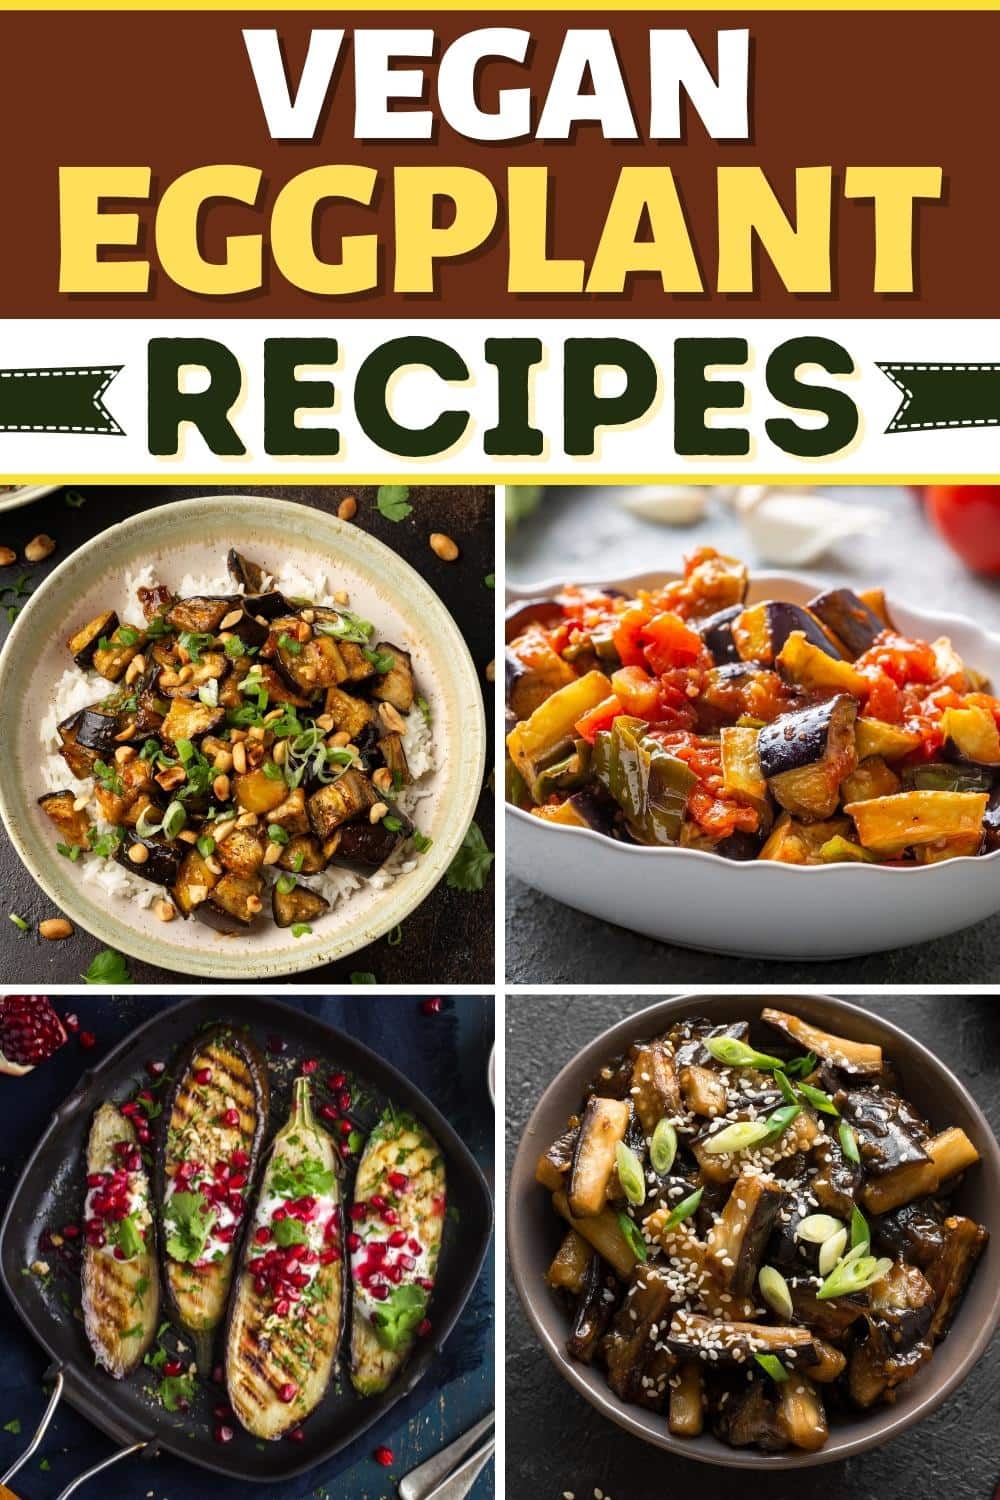 25 Easy Vegan Eggplant Recipes You’ll Love - Insanely Good